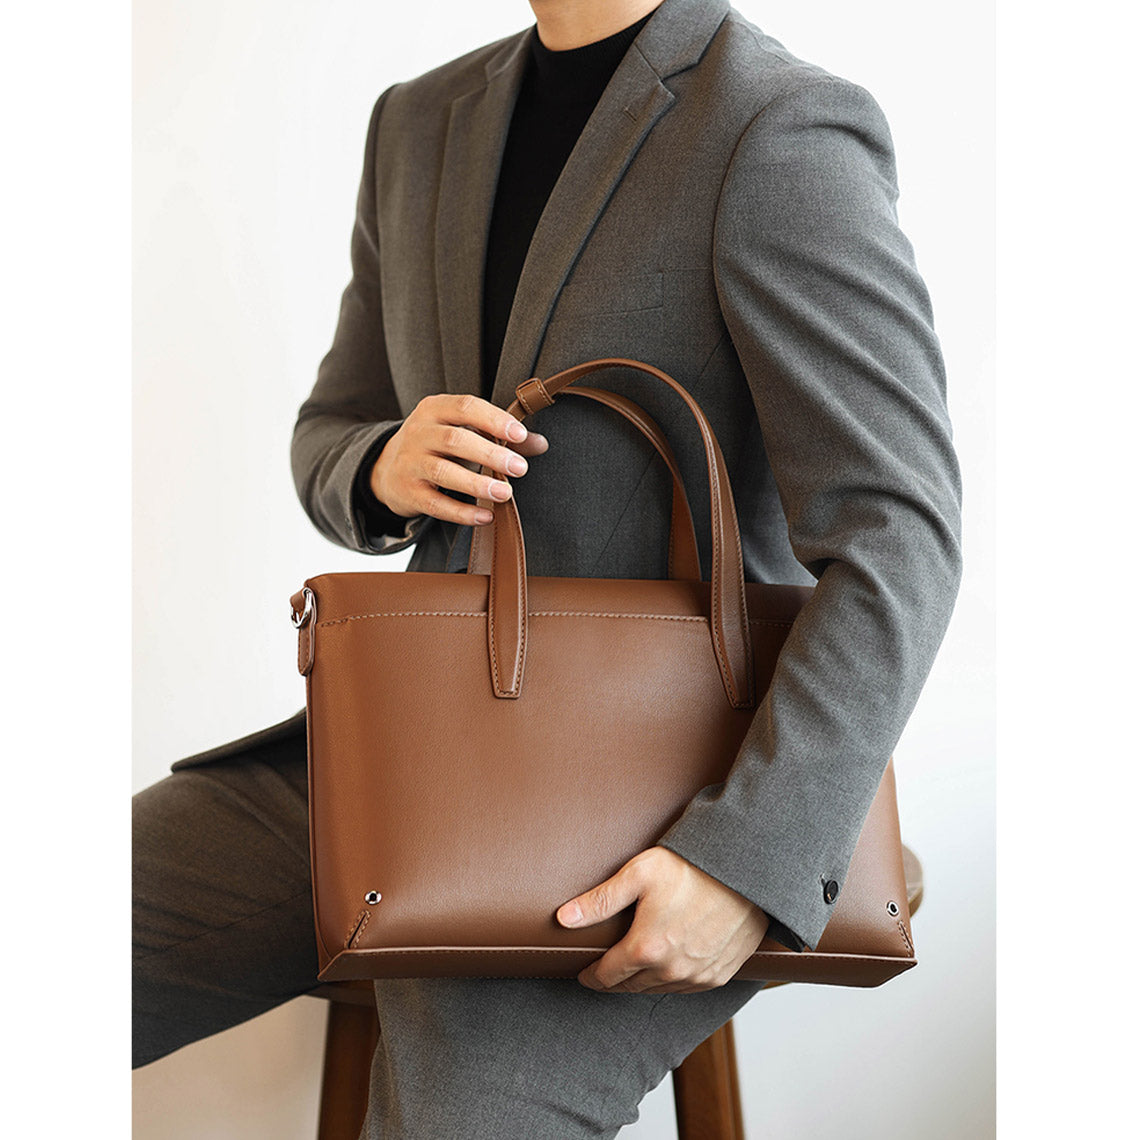 POPSEWING® Leather Briefcase Laptop Bag DIY Kit